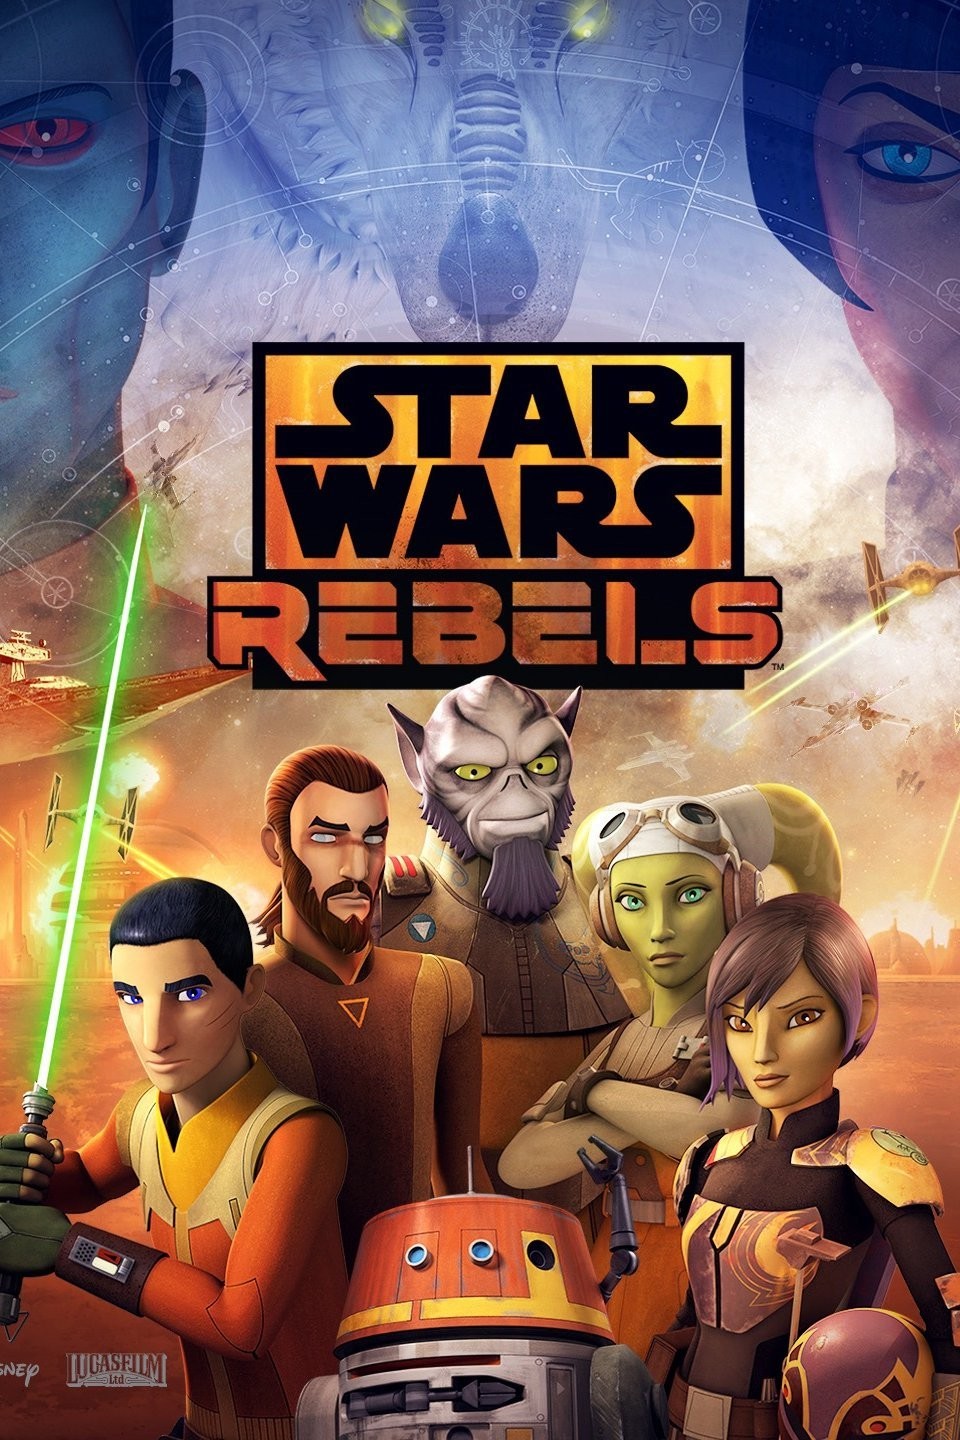 Star Wars Saga - Franchise - Rotten Tomatoes